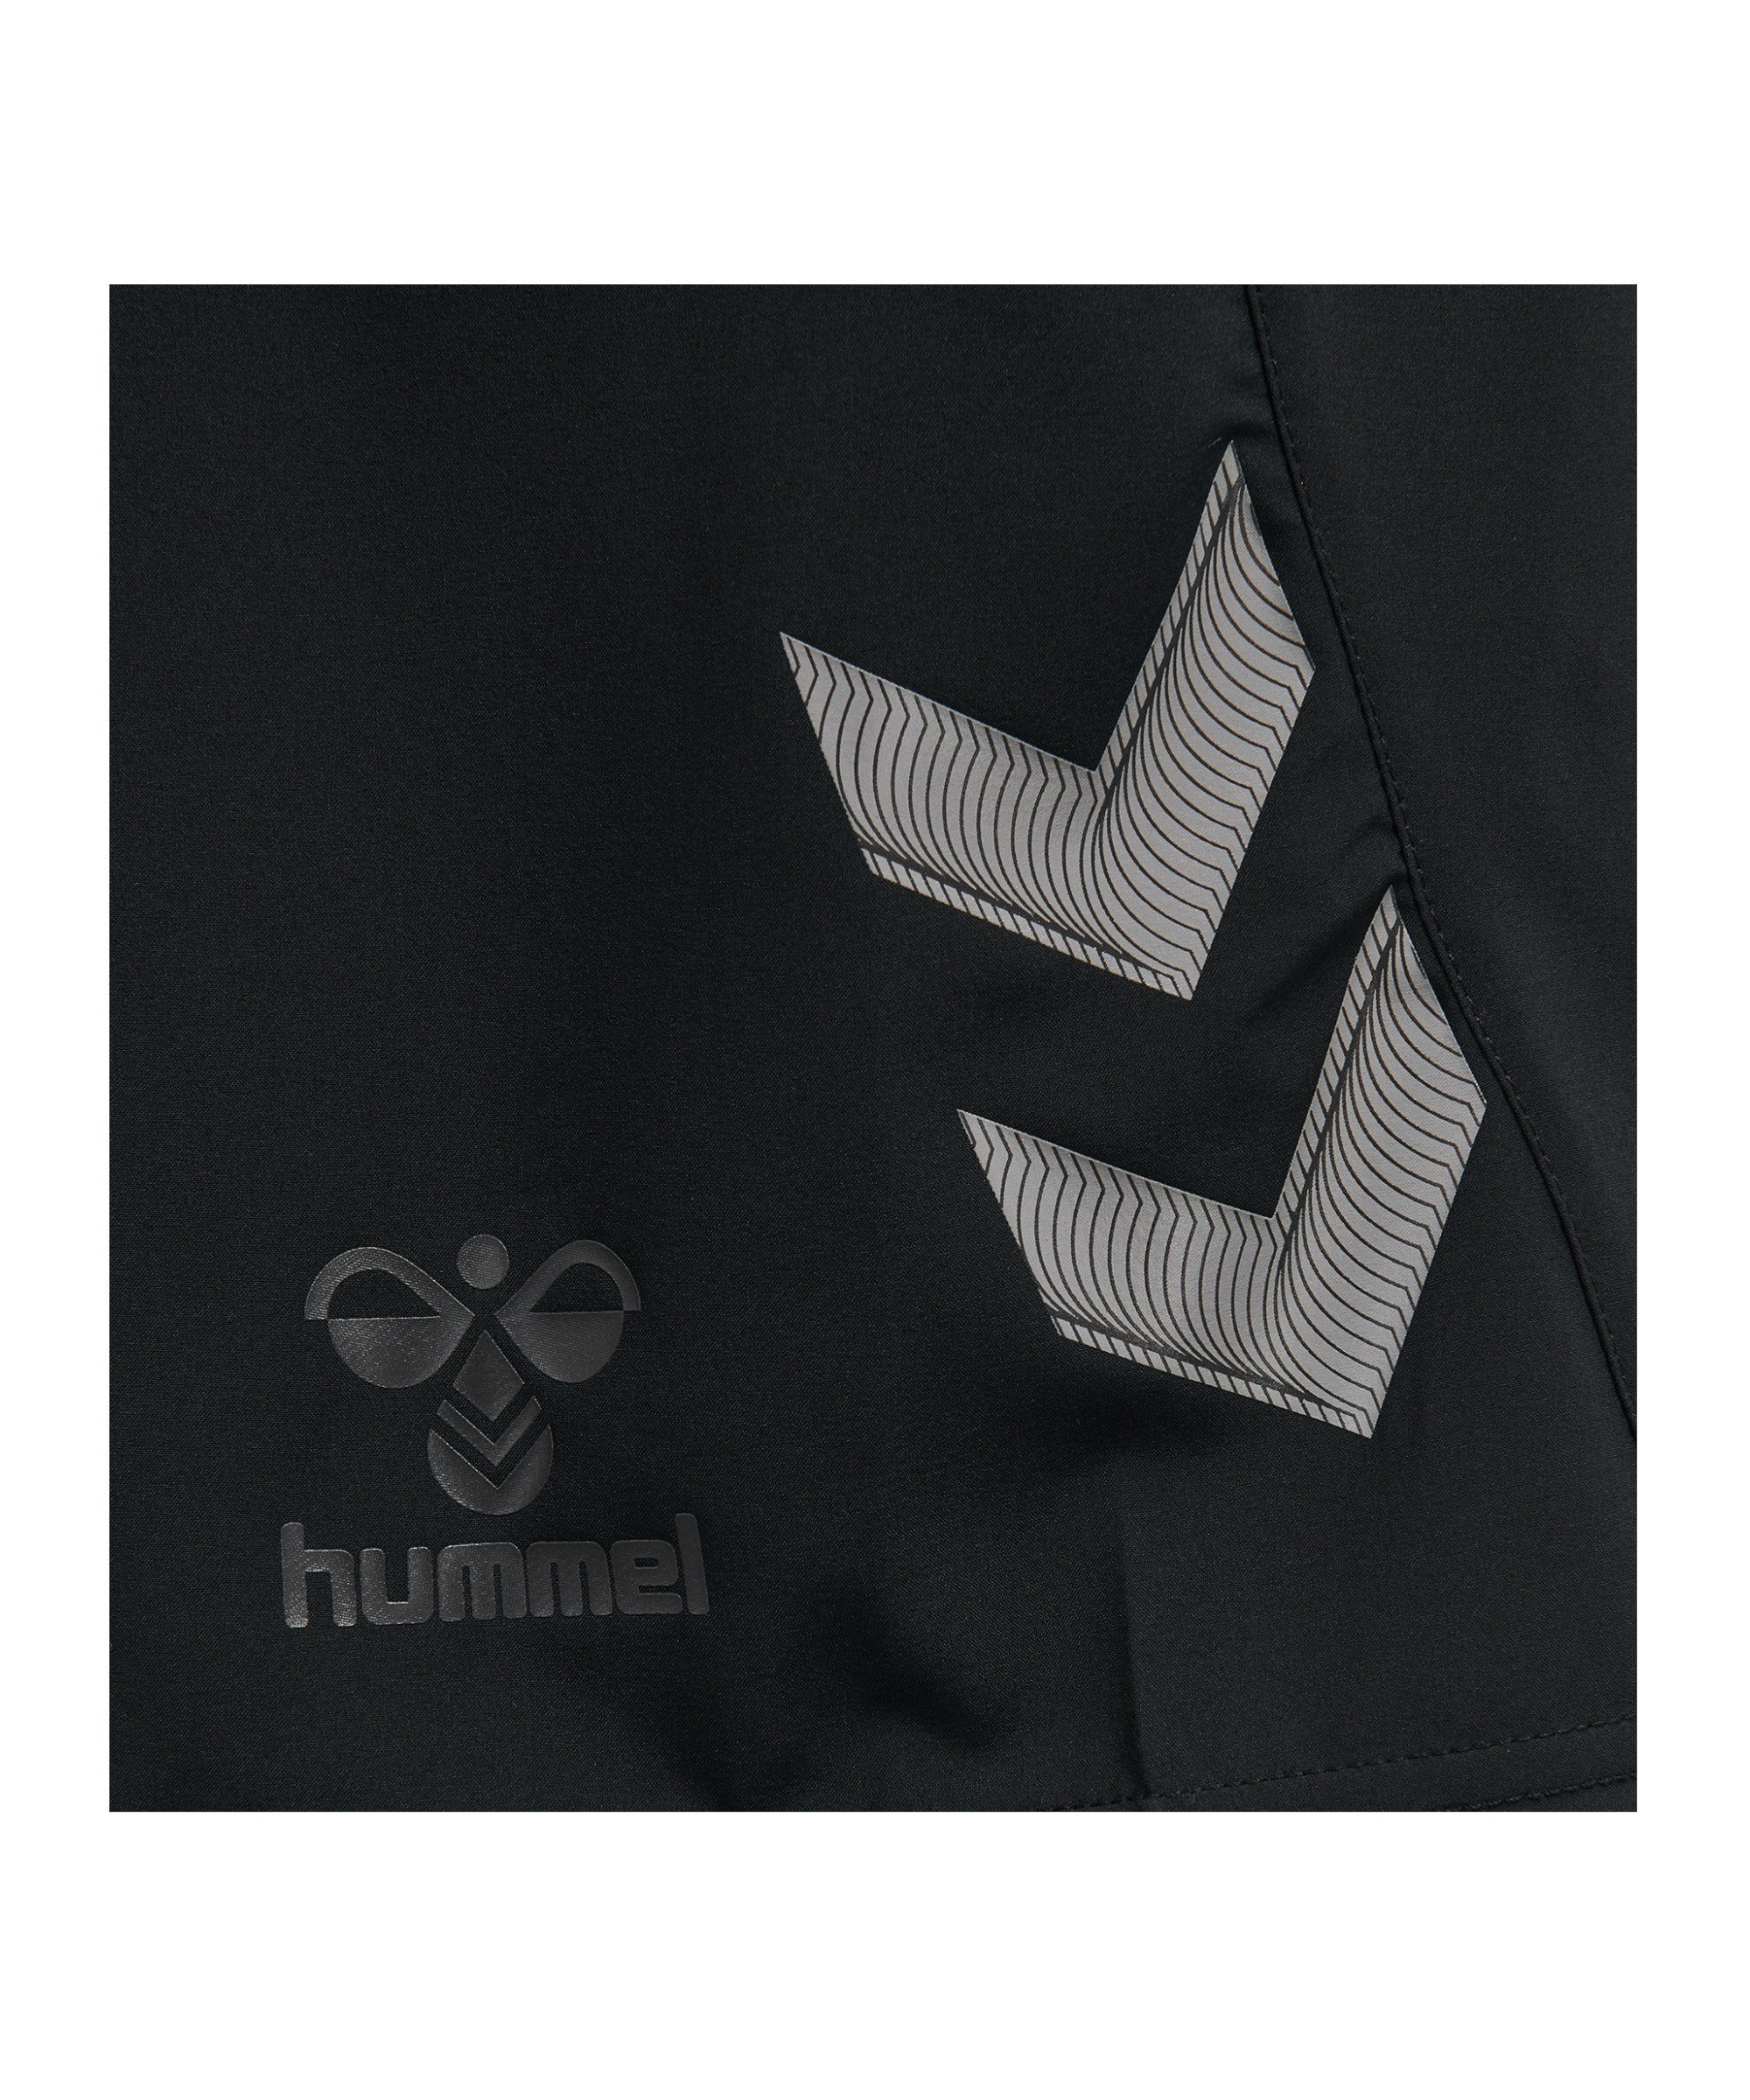 Sporthose Pro hmlLEAD Shorts hummel schwarz